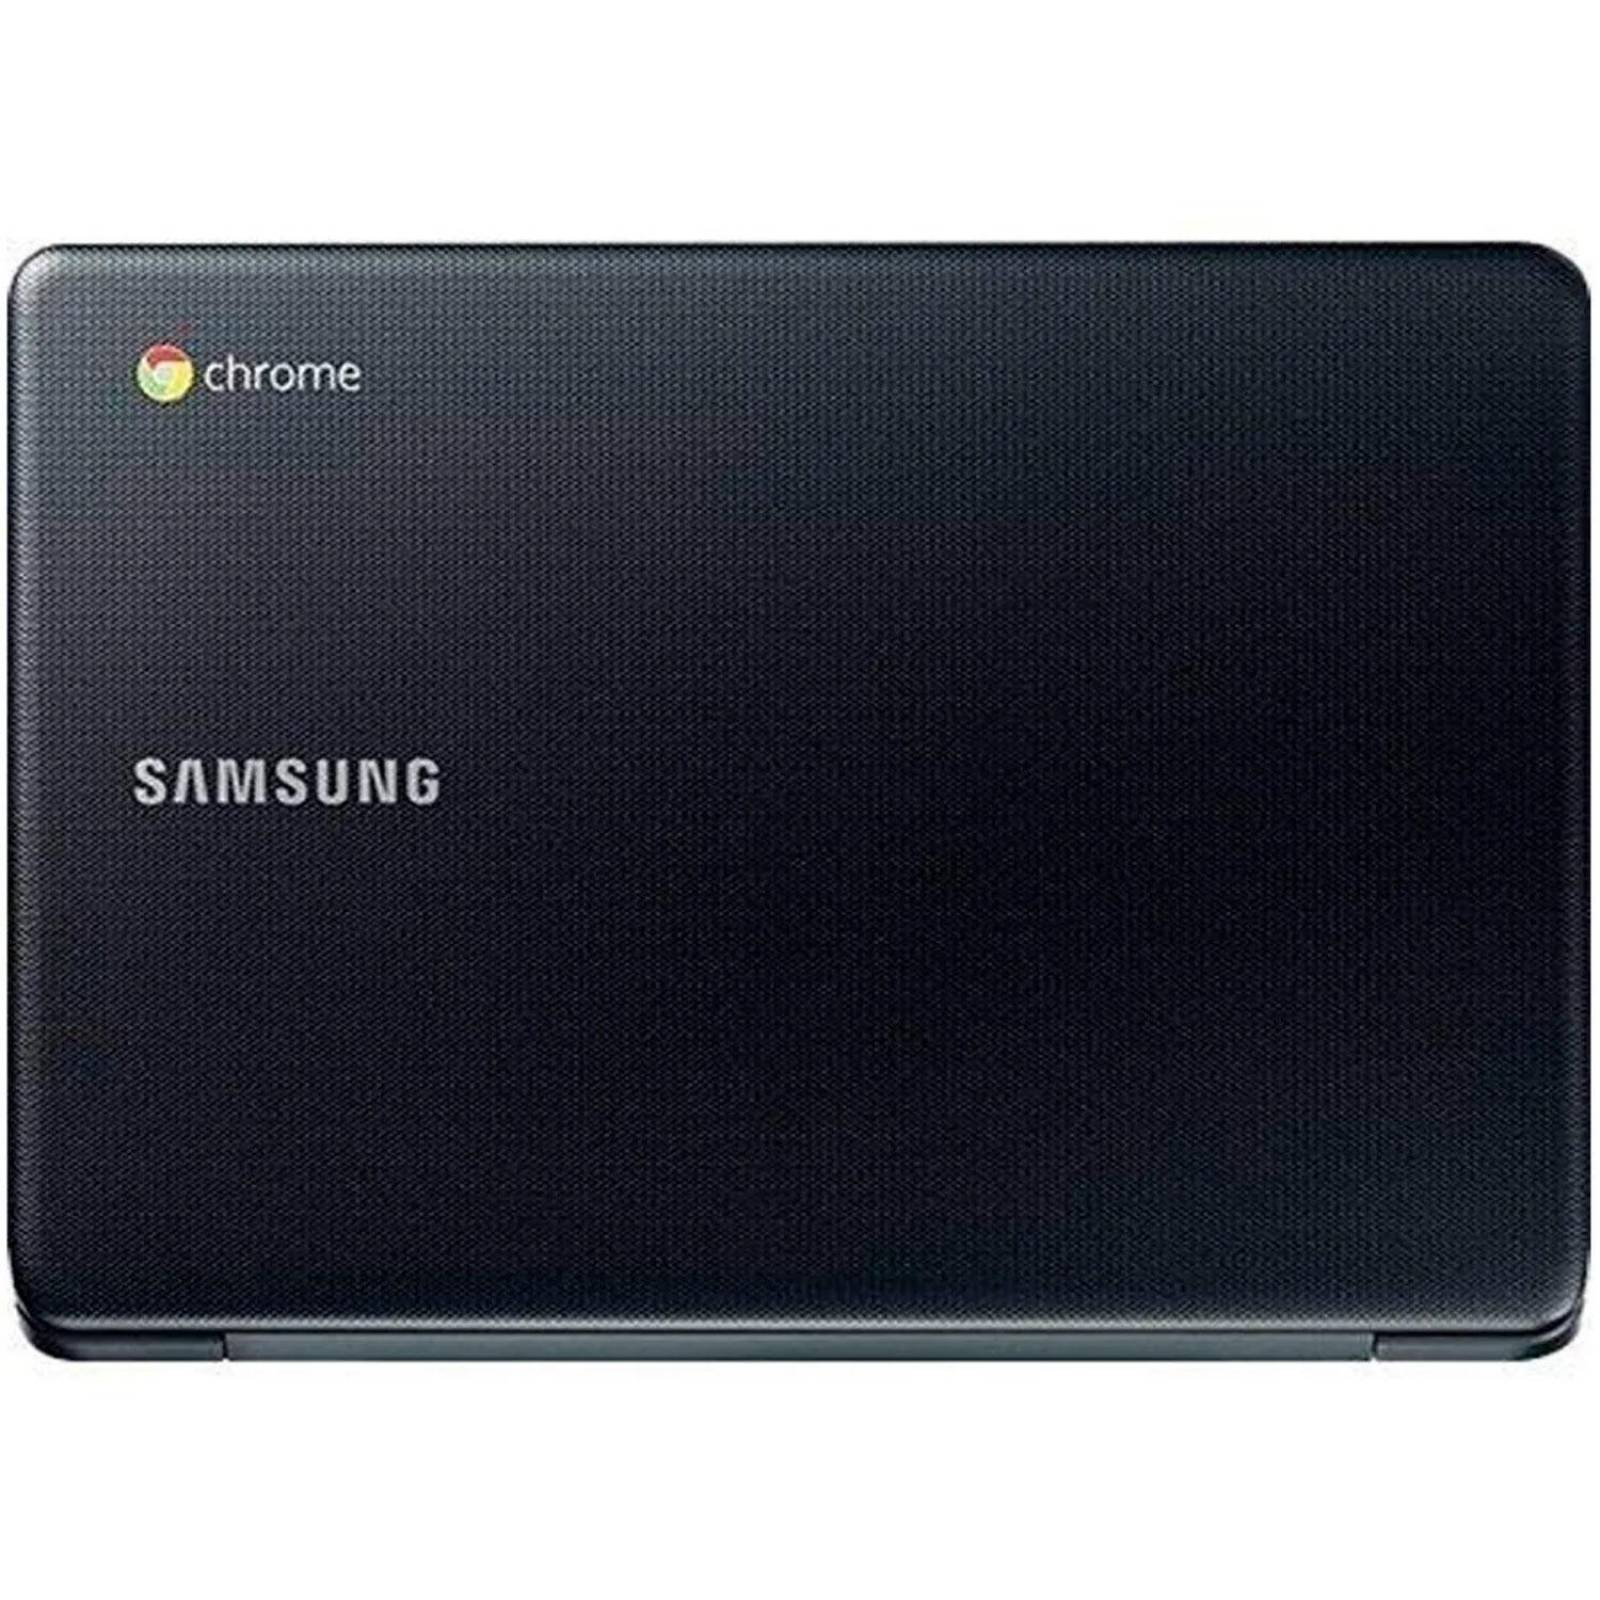 Laptop SAMSUNG Chromebook 3 Intel Celeron N3060 4GB 16GB 11.6 XE500C13-K04US 